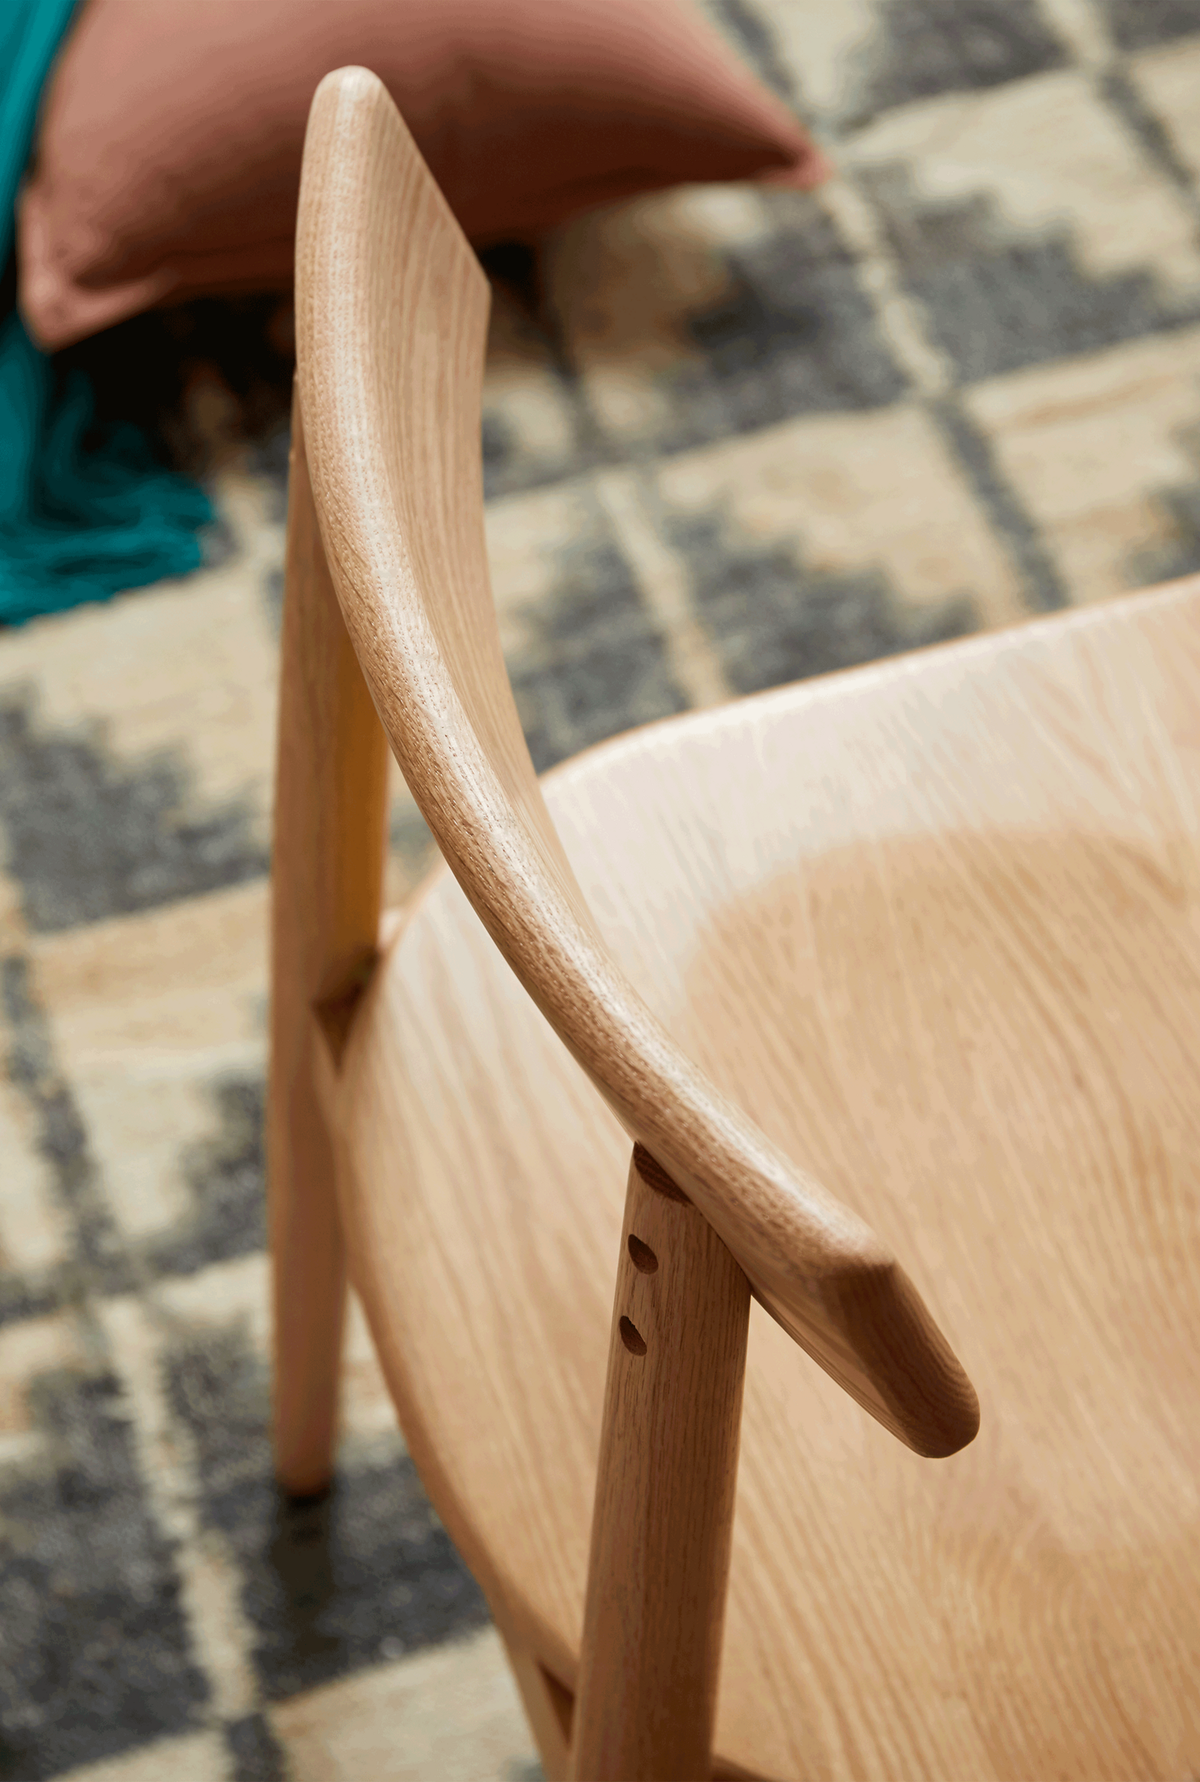 MOTREFF 橡木餐椅